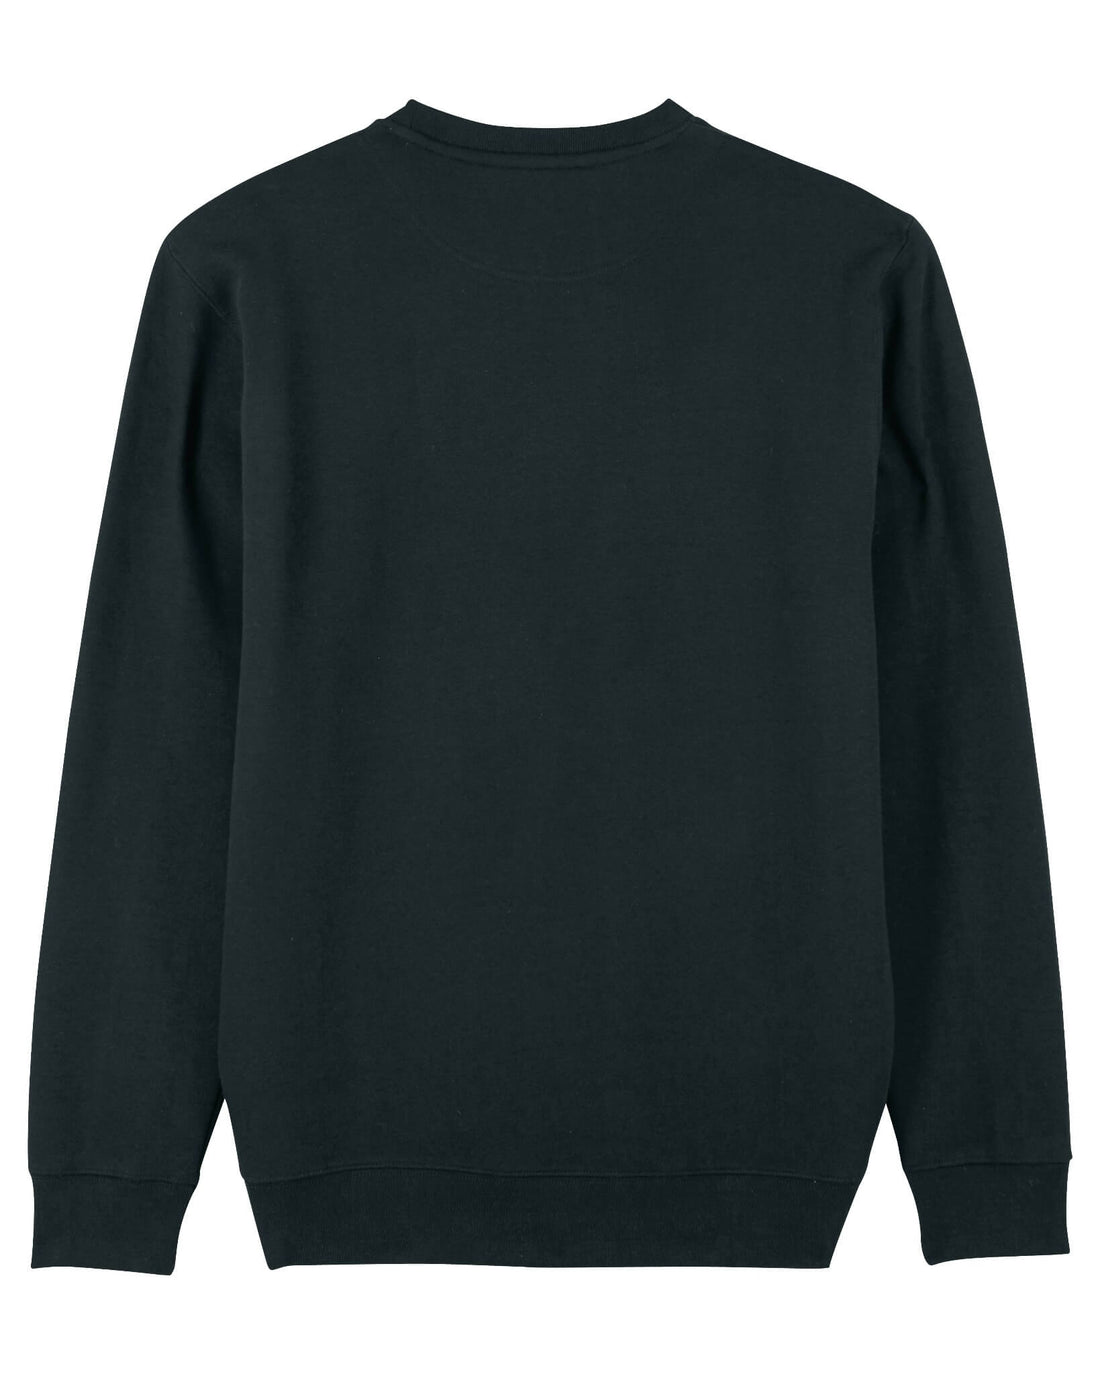 Black Skater Sweatshirt, The Supply Network Back Print